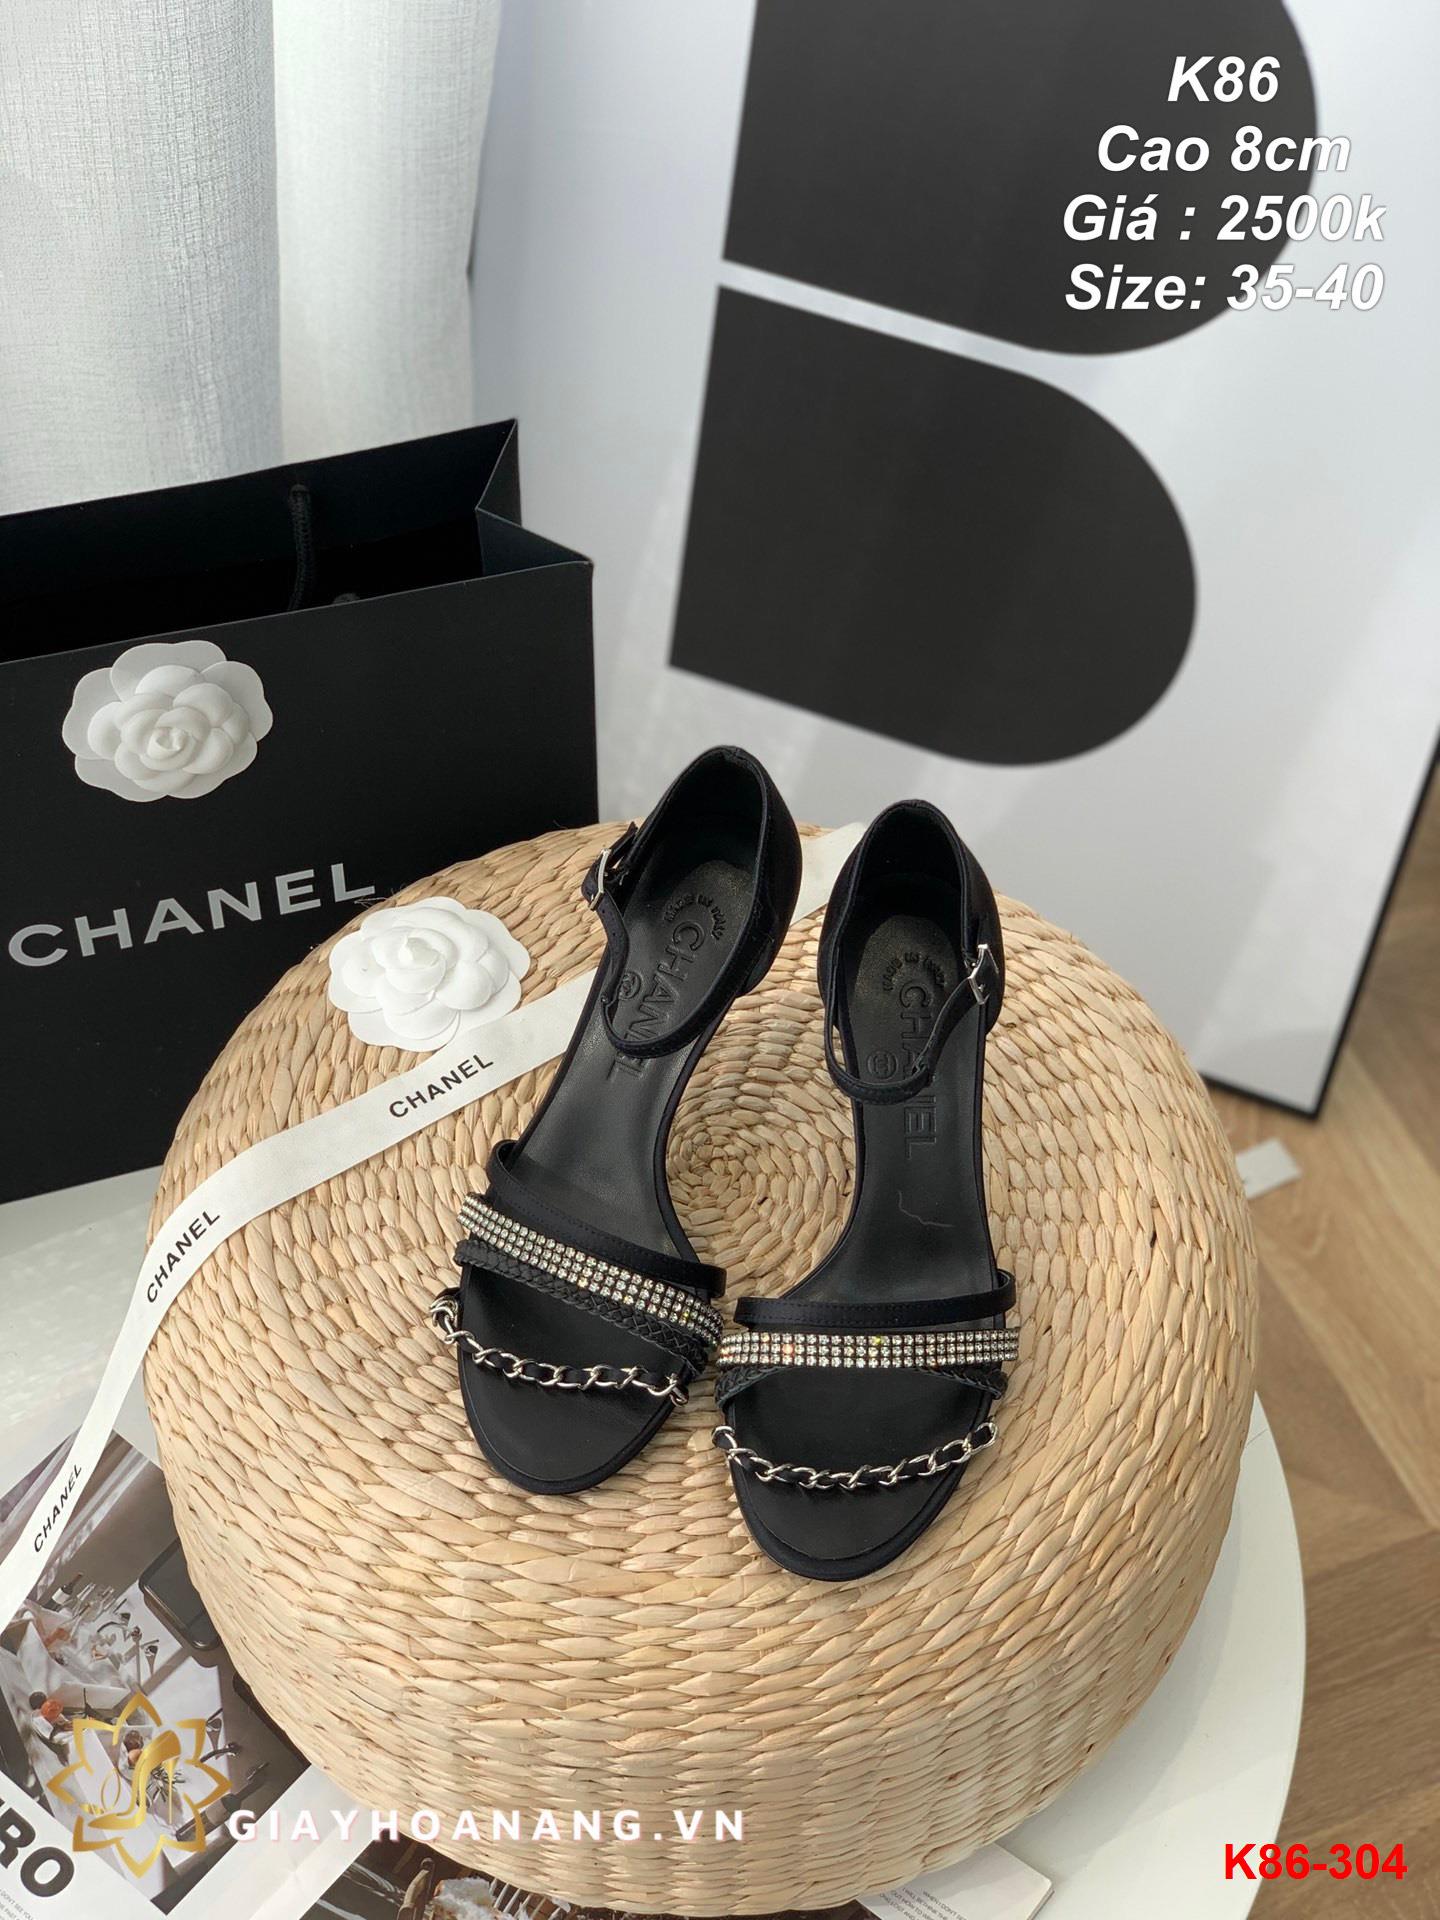 K86-304 Chanel sandal cao 8cm siêu cấp